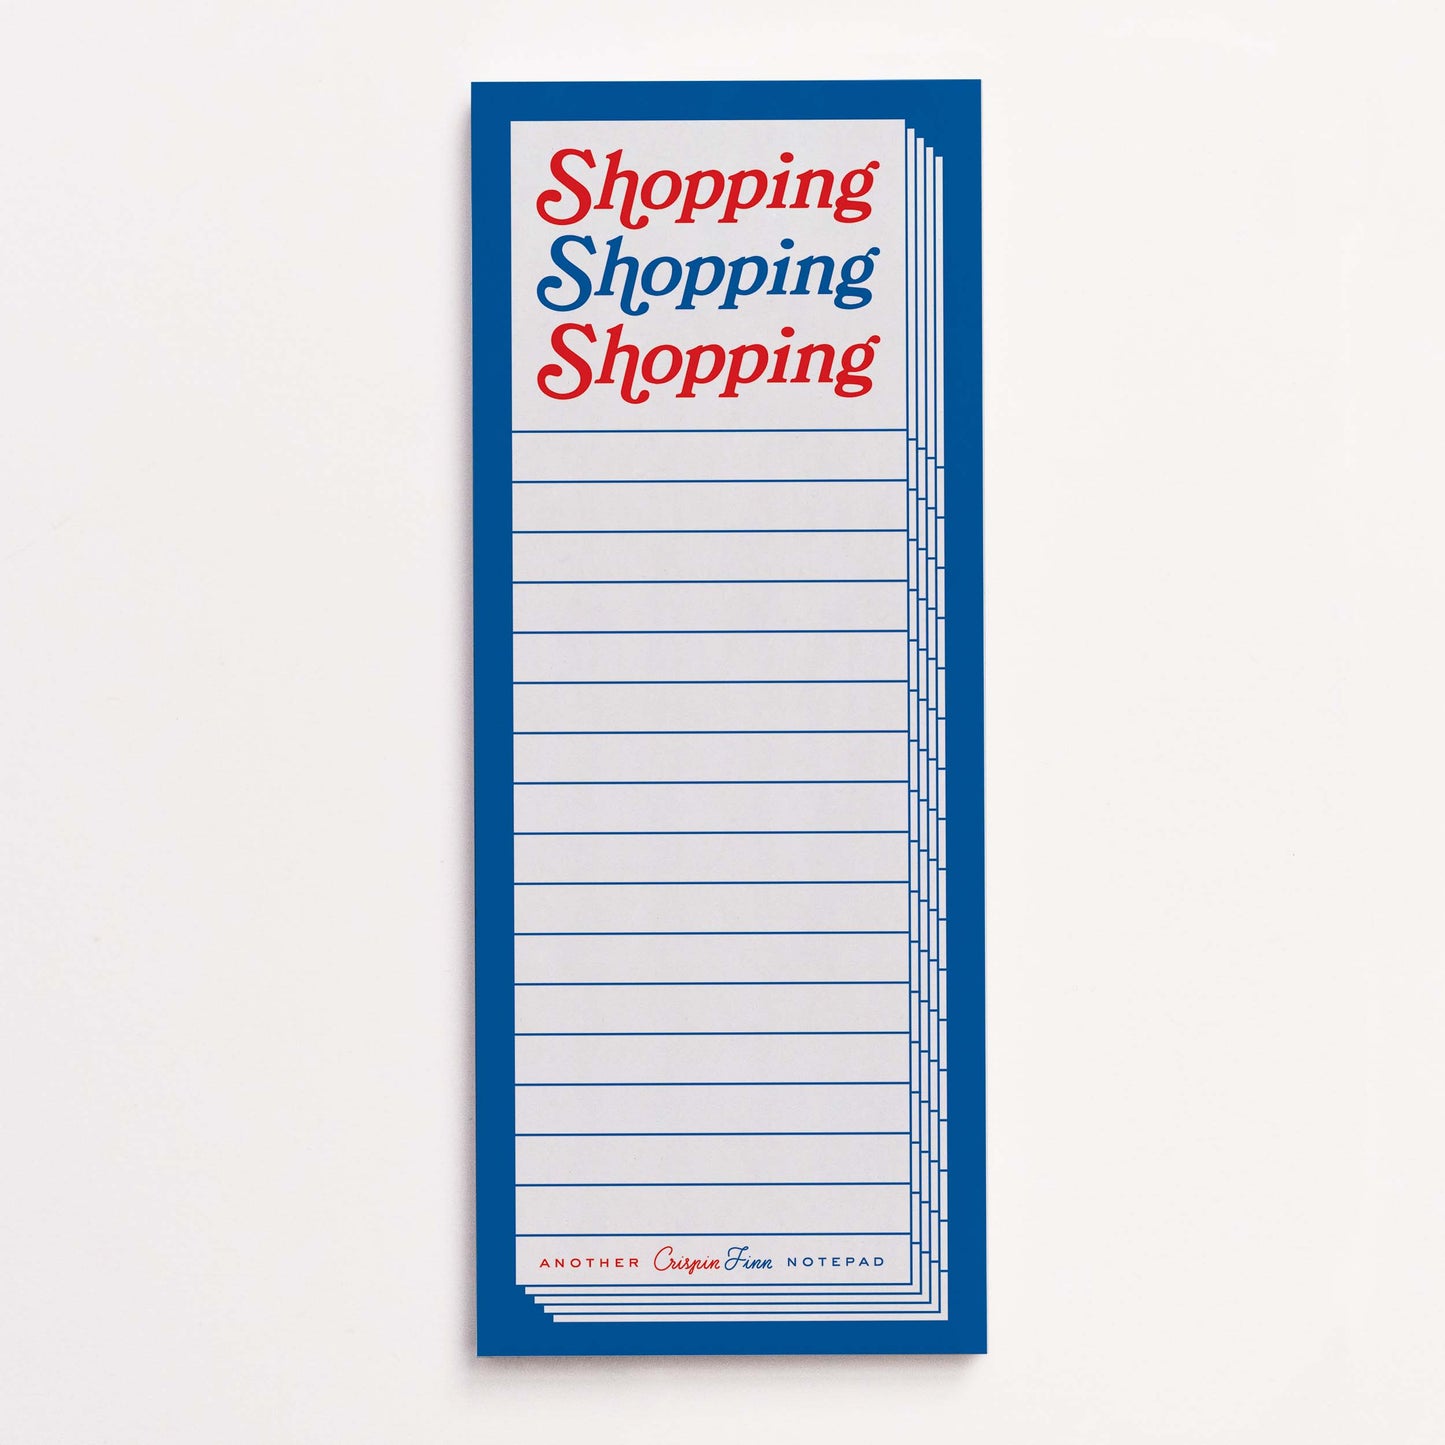 Crispin Finn - Shopping Note Pad